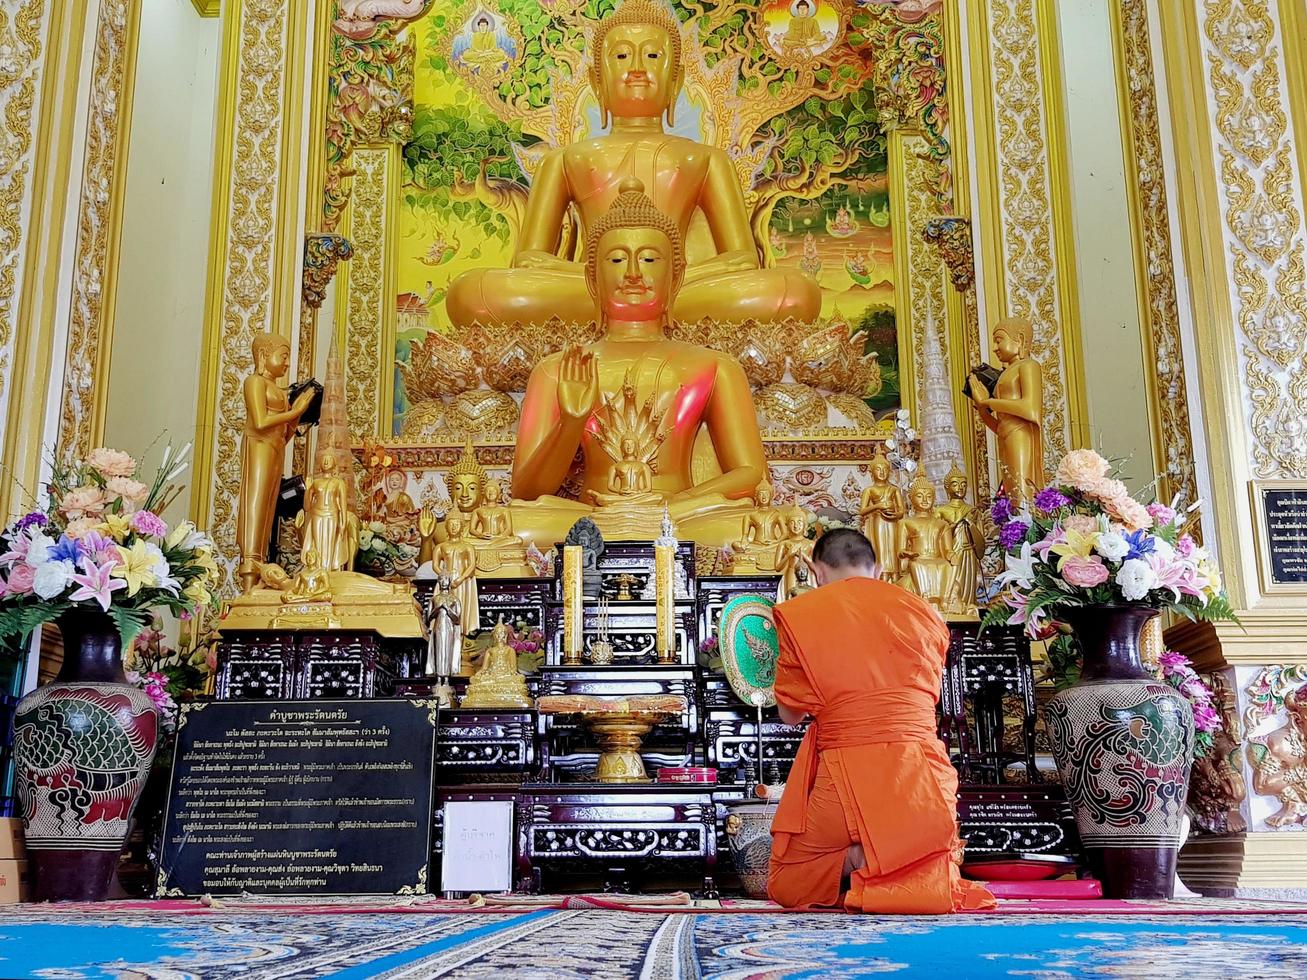 bangkok, thailand - 16. juni 2018. mönche beten im wat thai, thailand foto